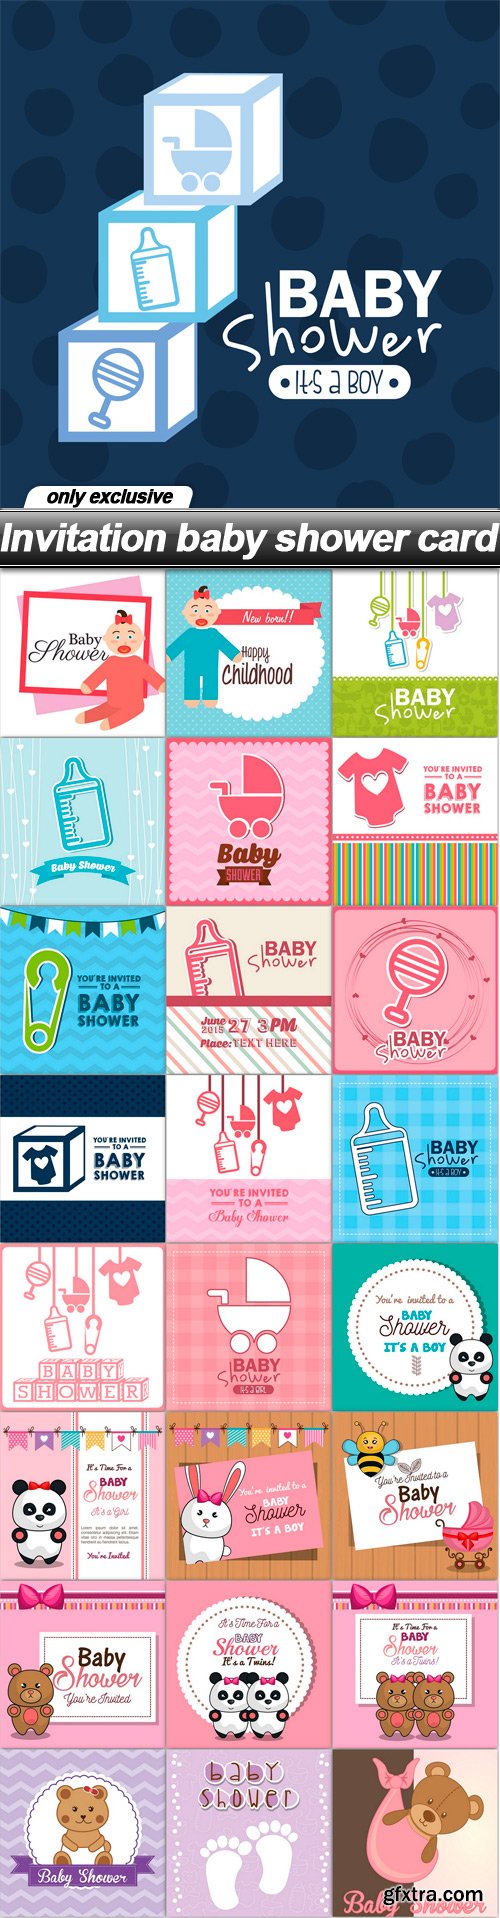 Invitation baby shower card - 25 EPS